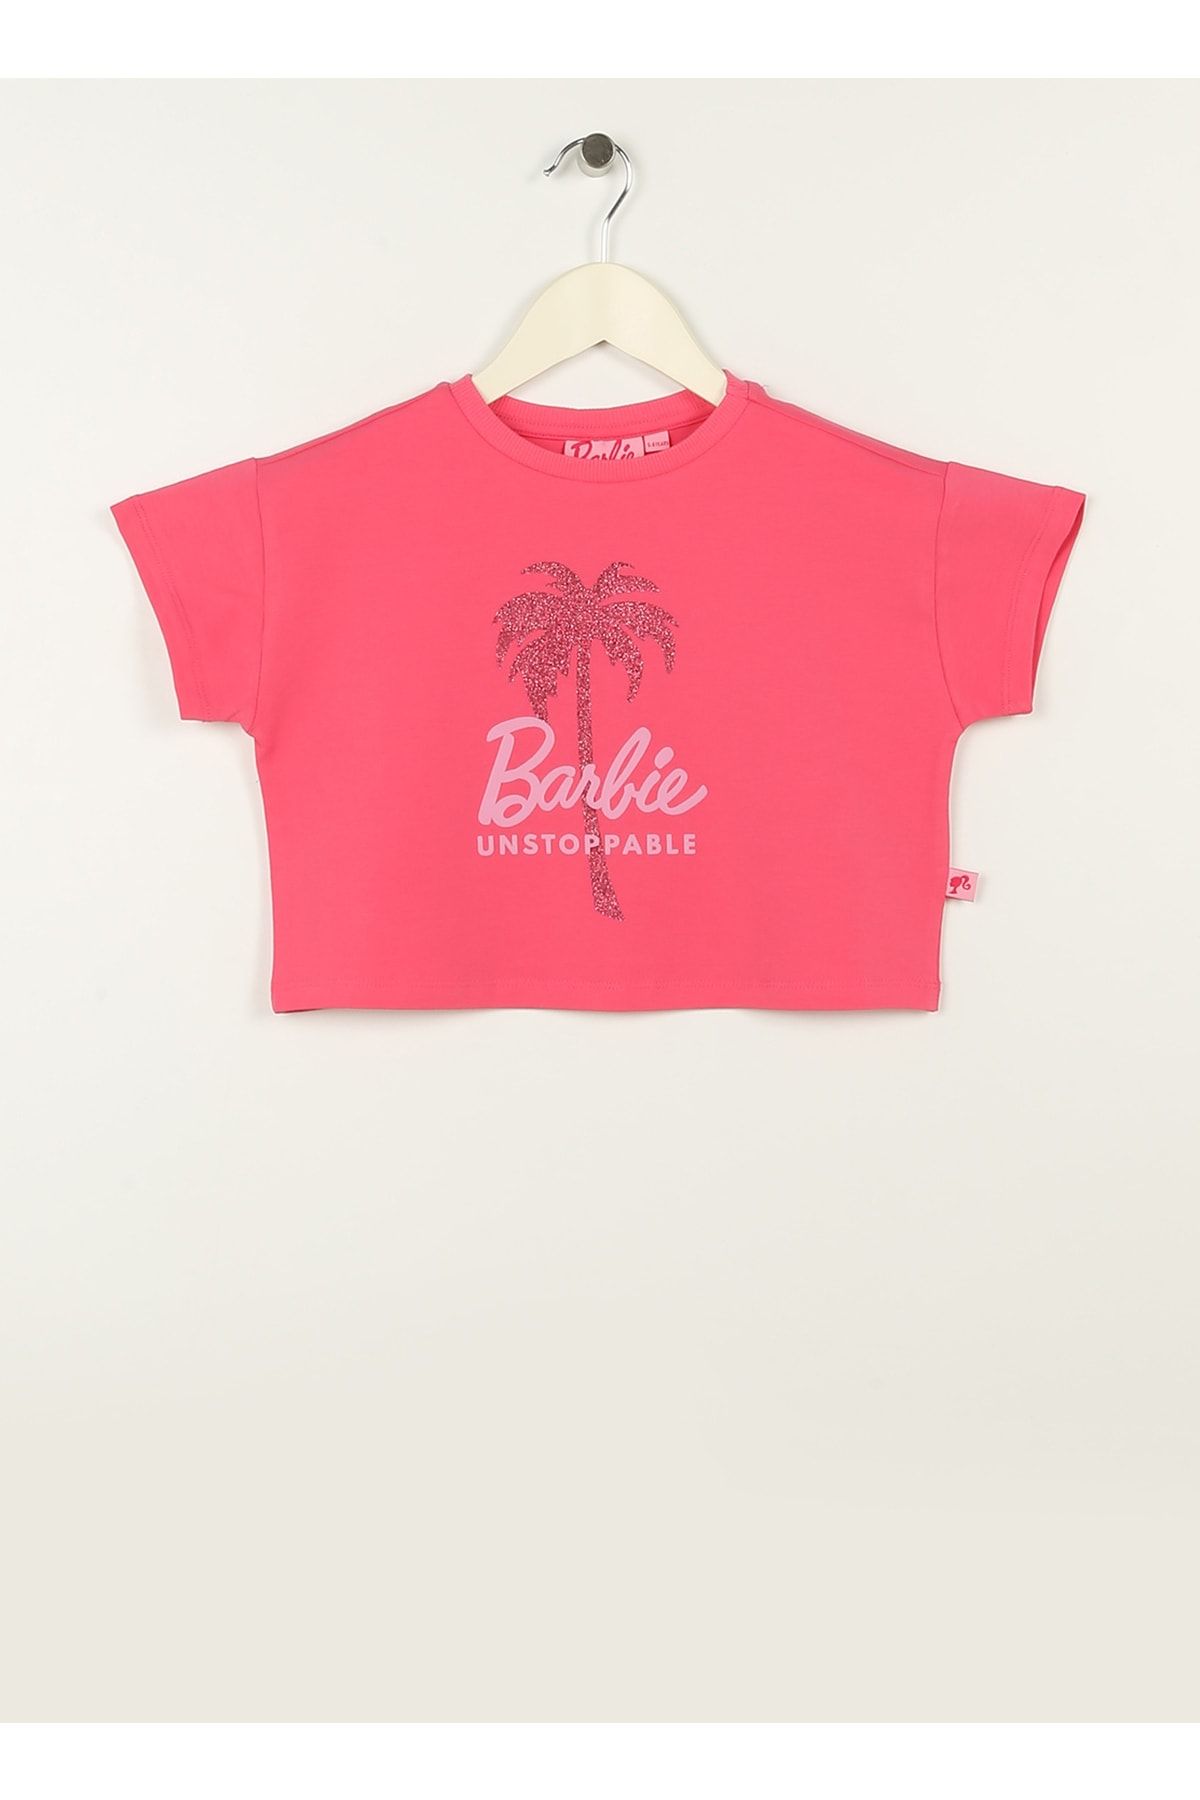 Barbie Baskılı Fuşya Kız Çocuk T-shirt 23ssb-65